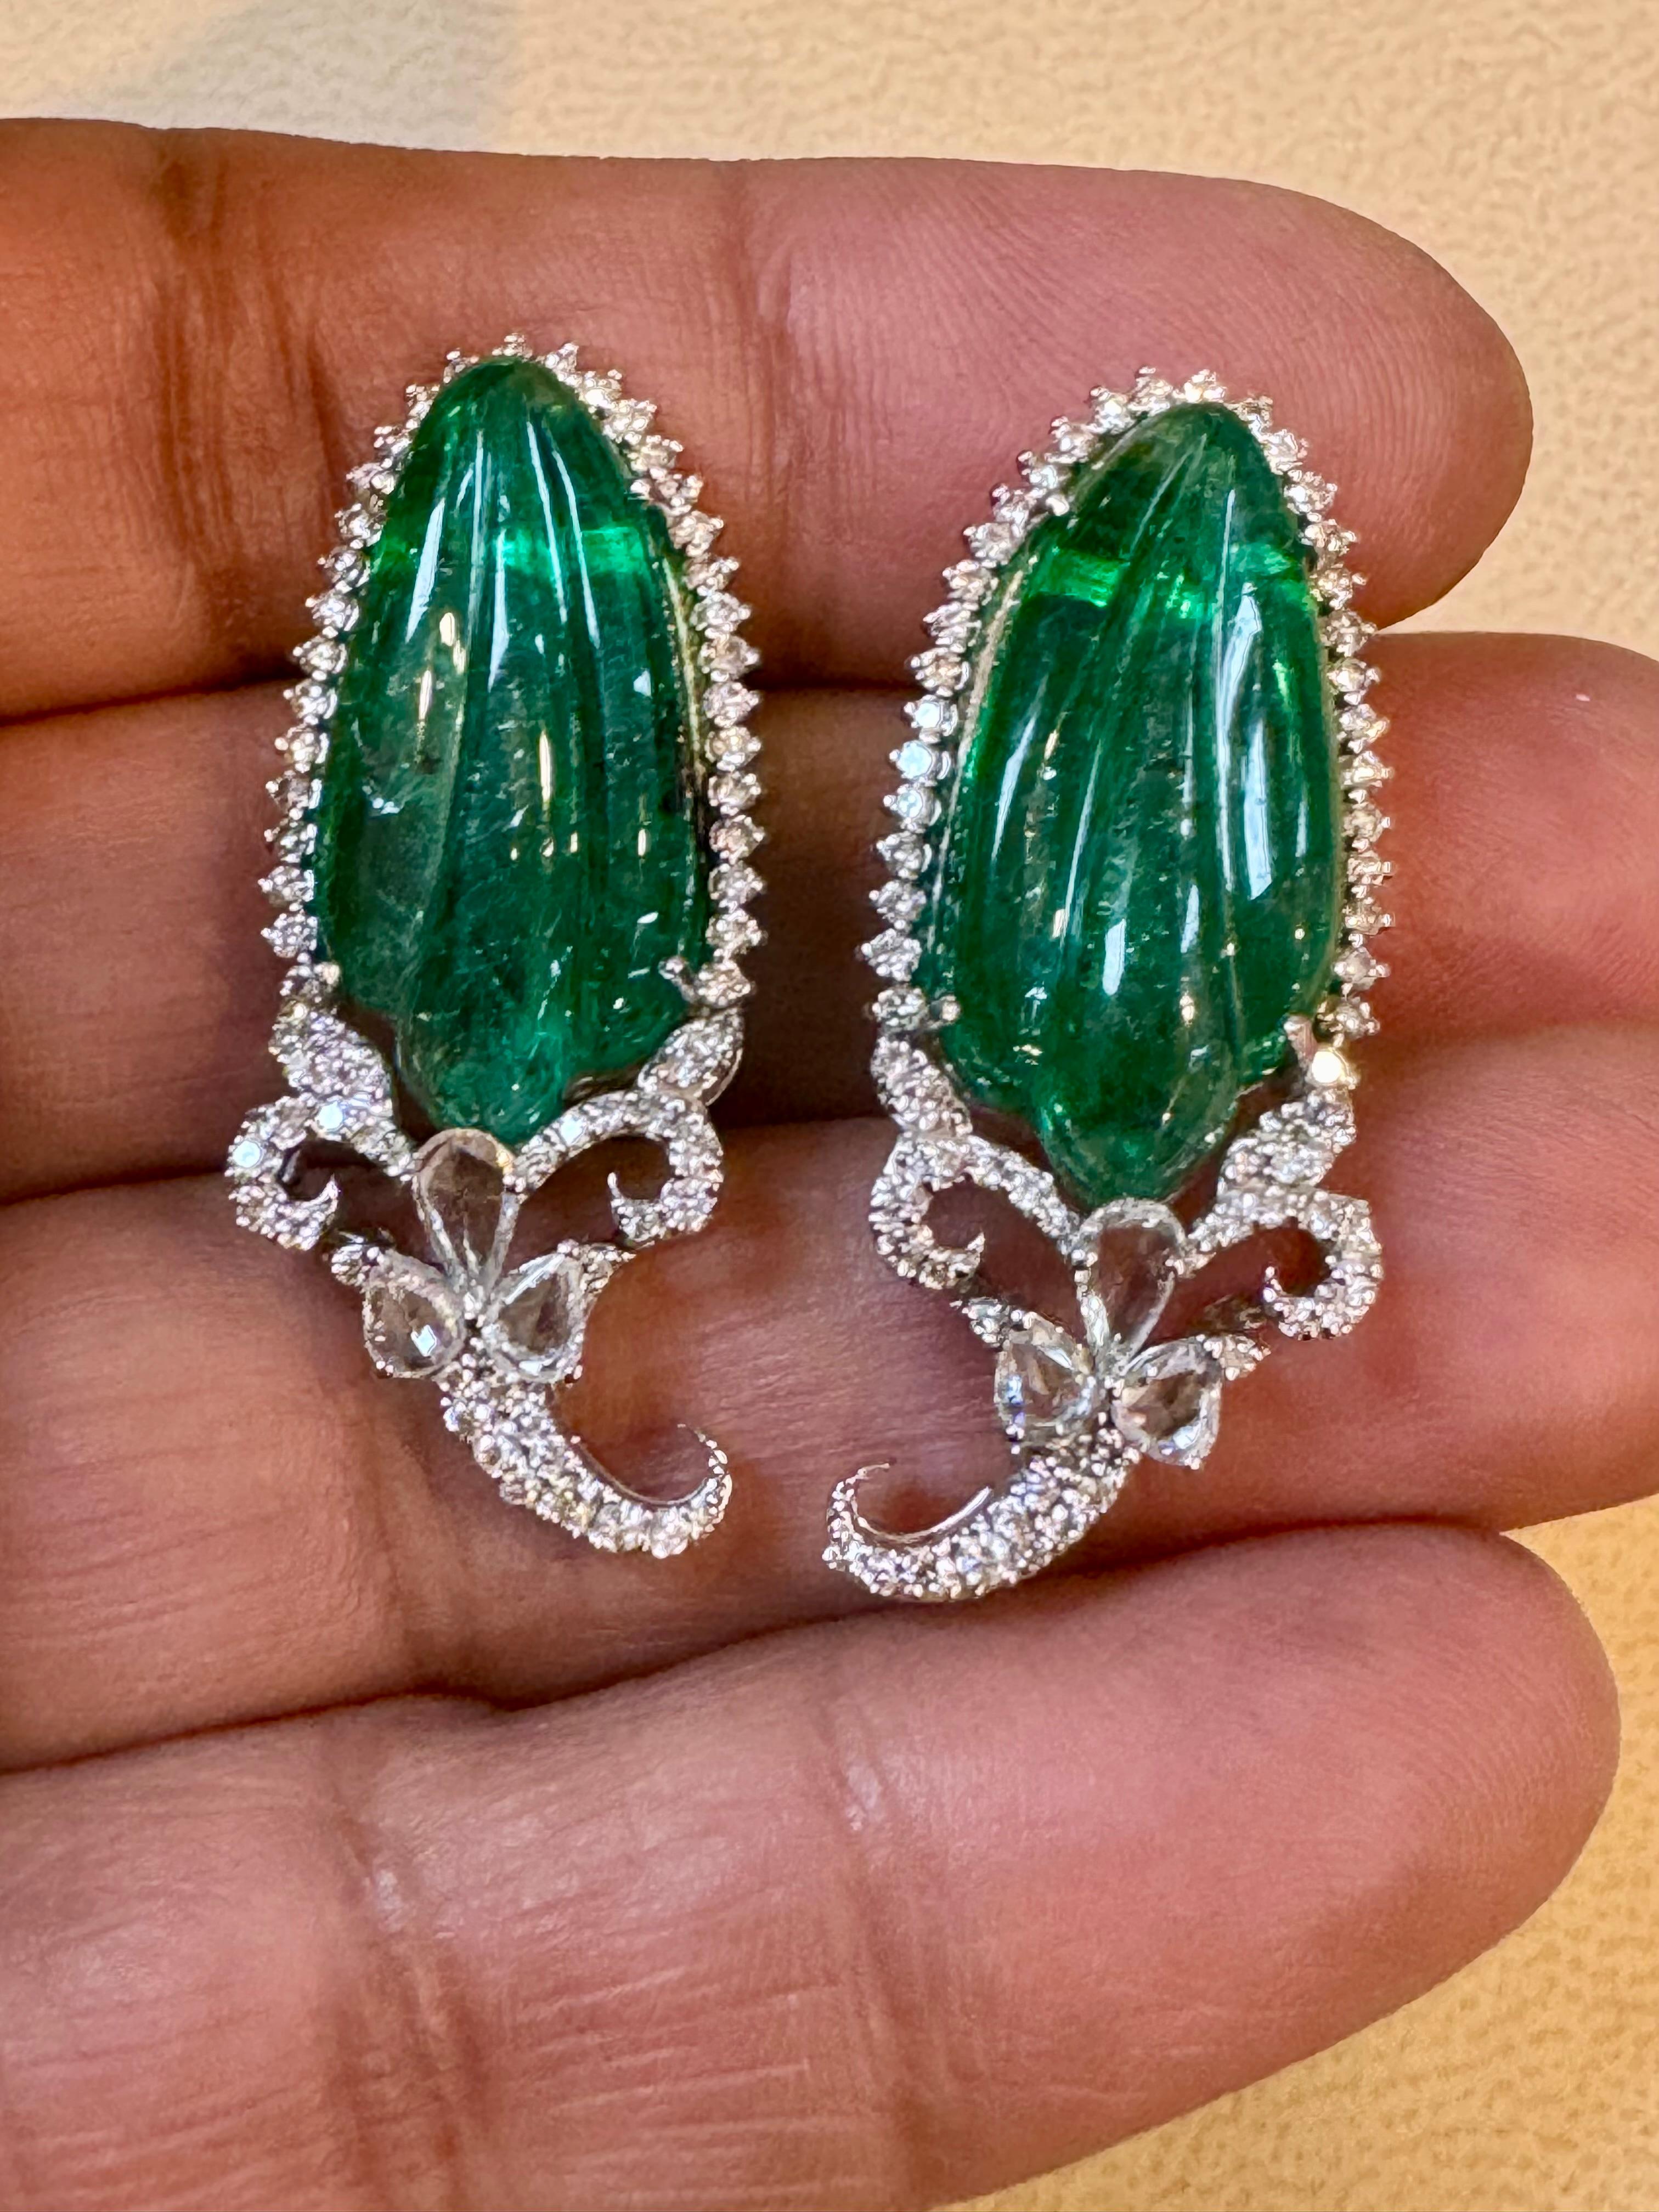 22 Ct Carved Emerald & 2 Ct Diamond Earrings 18 Karat White Gold Post Earrings For Sale 4